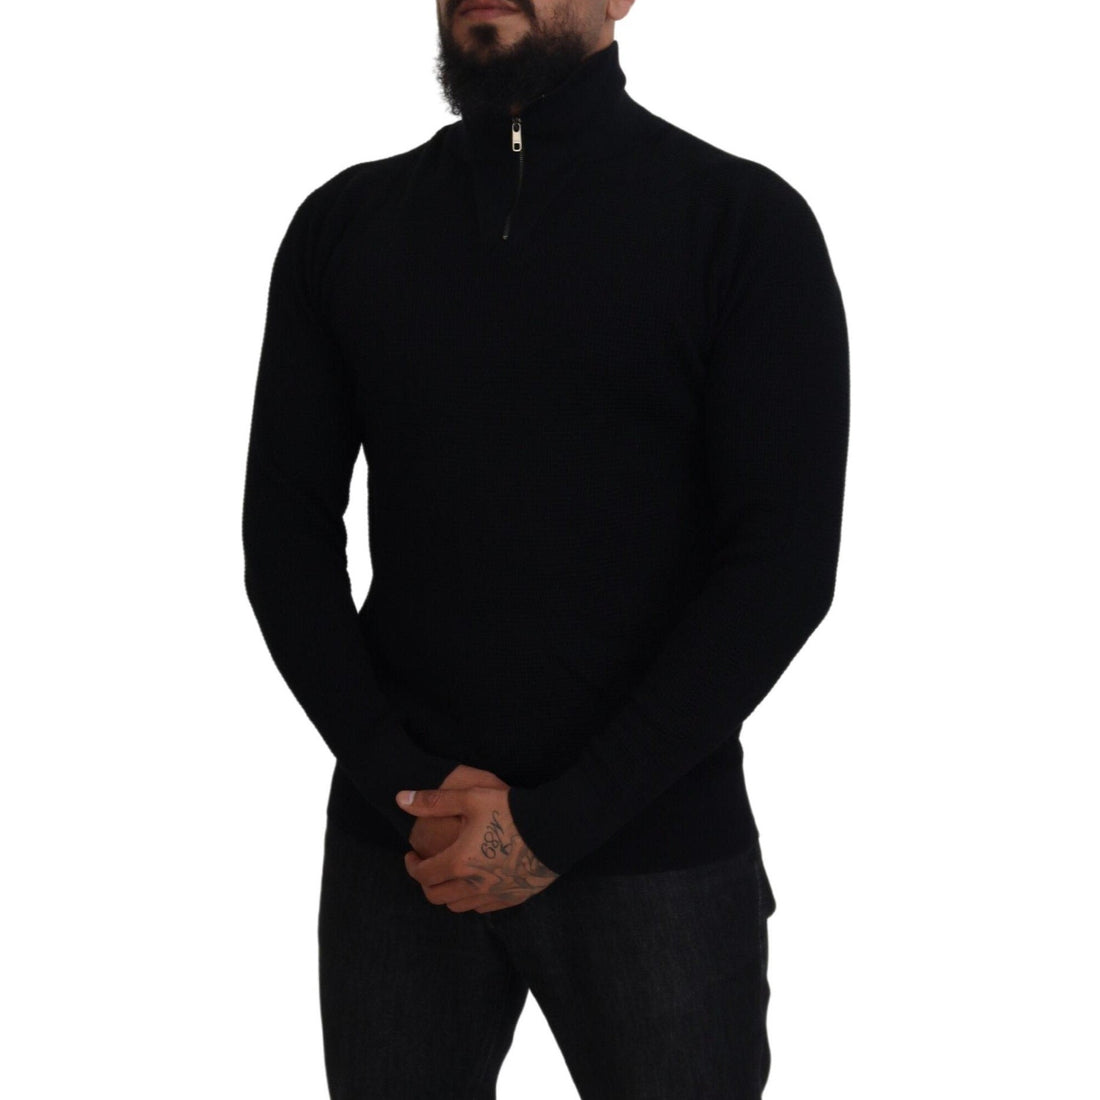 Dolce & Gabbana Elegant Silk Blend Black Pullover Sweater